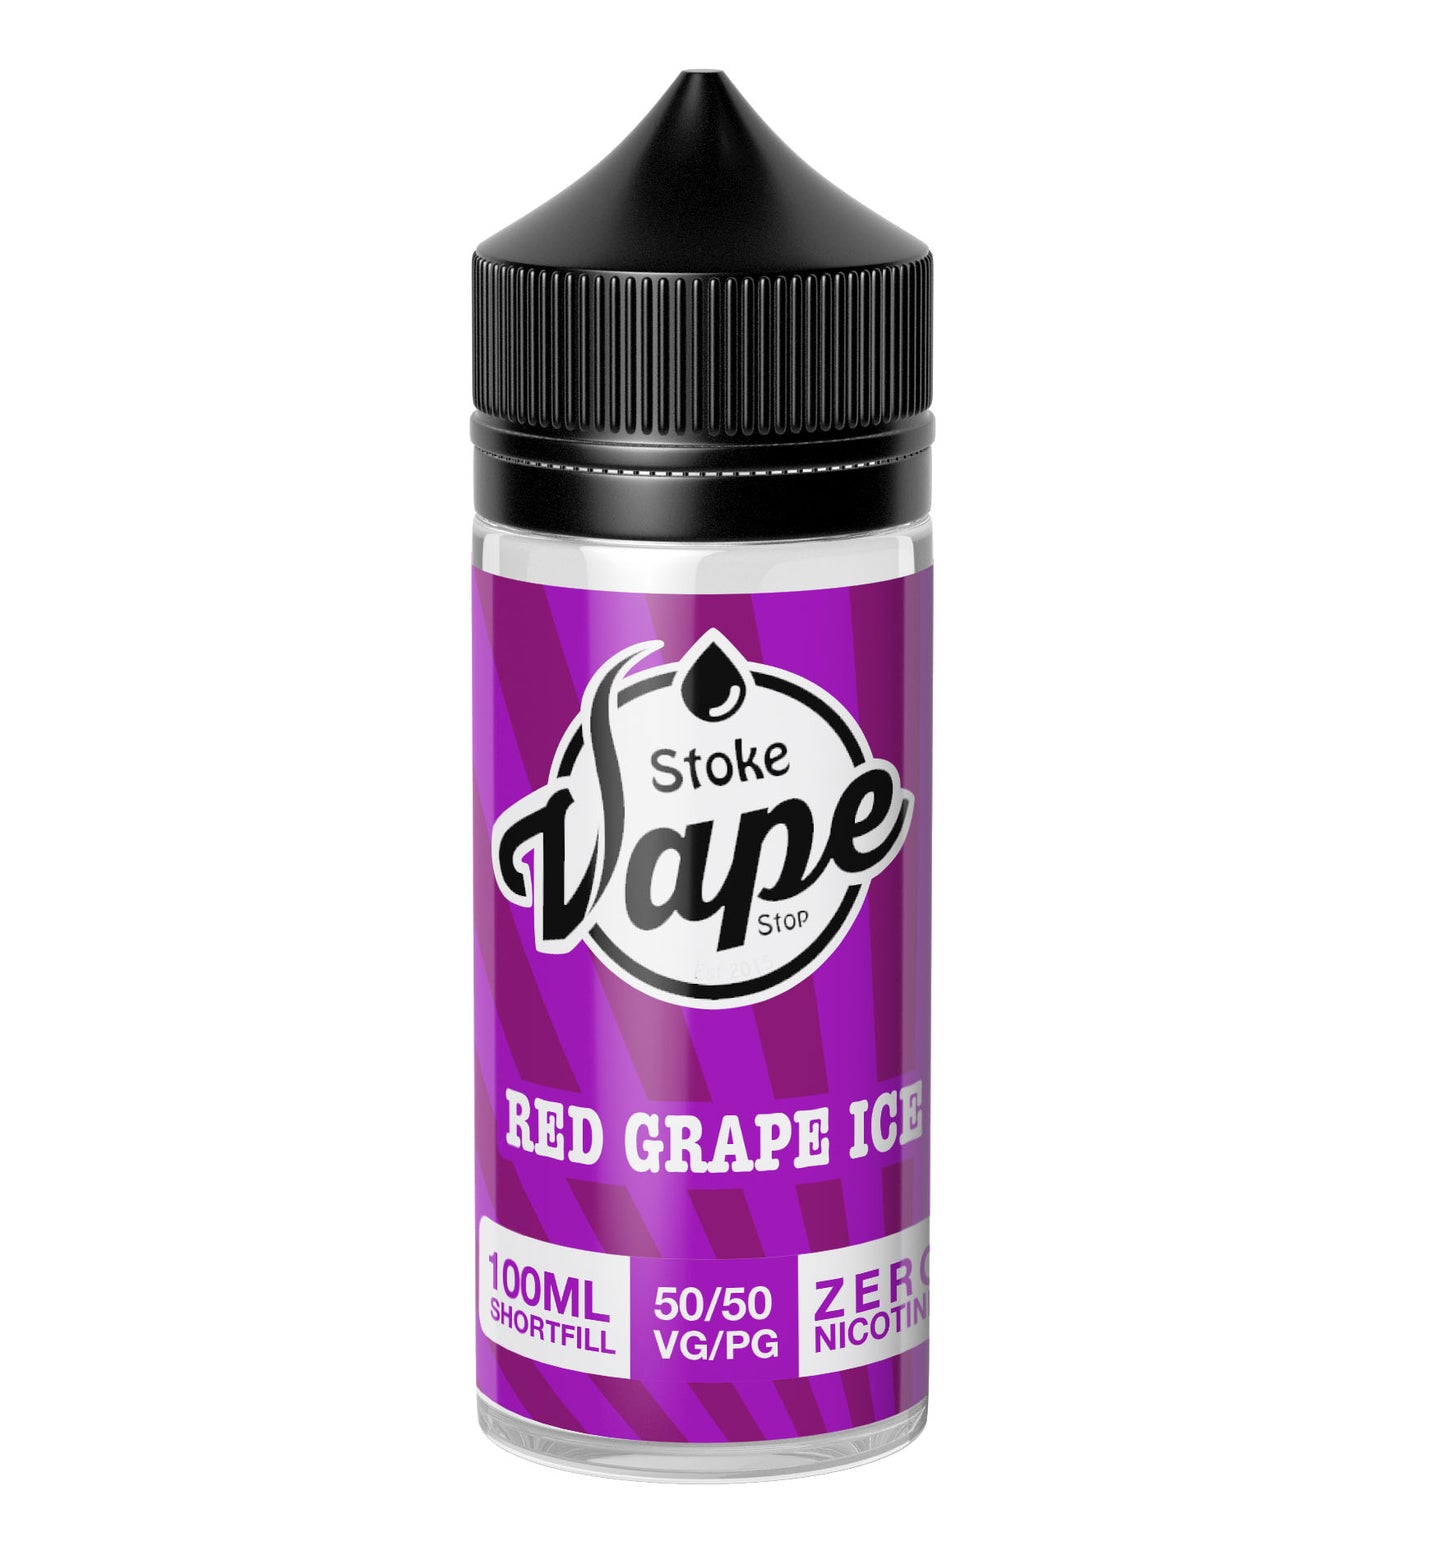 Red Grape Ice 50/50 STOKE VAPE STOP - 100ML